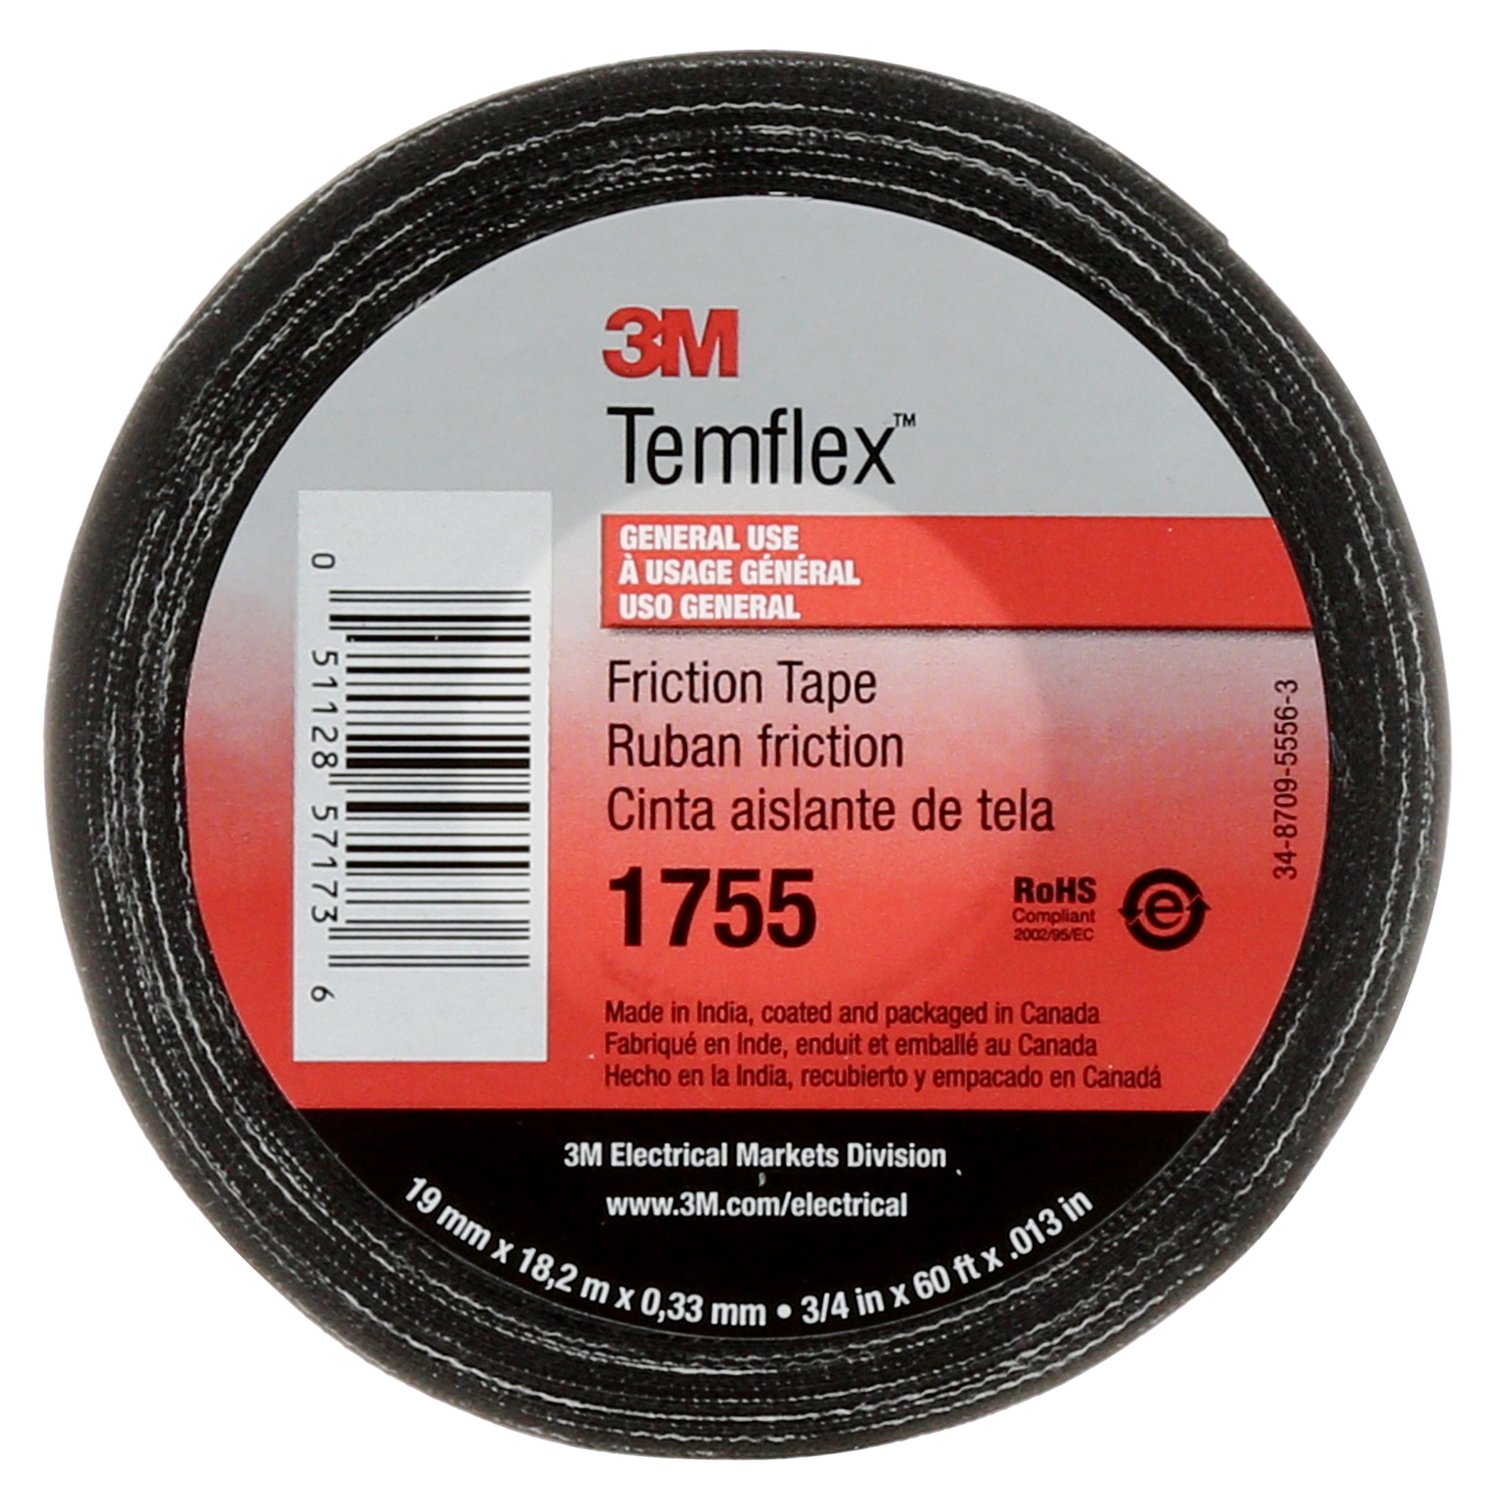 7000058870 - 3M Temflex Cotton Friction Tape 1755, 3/4 in x 60 ft, Black, 20
rolls/Case